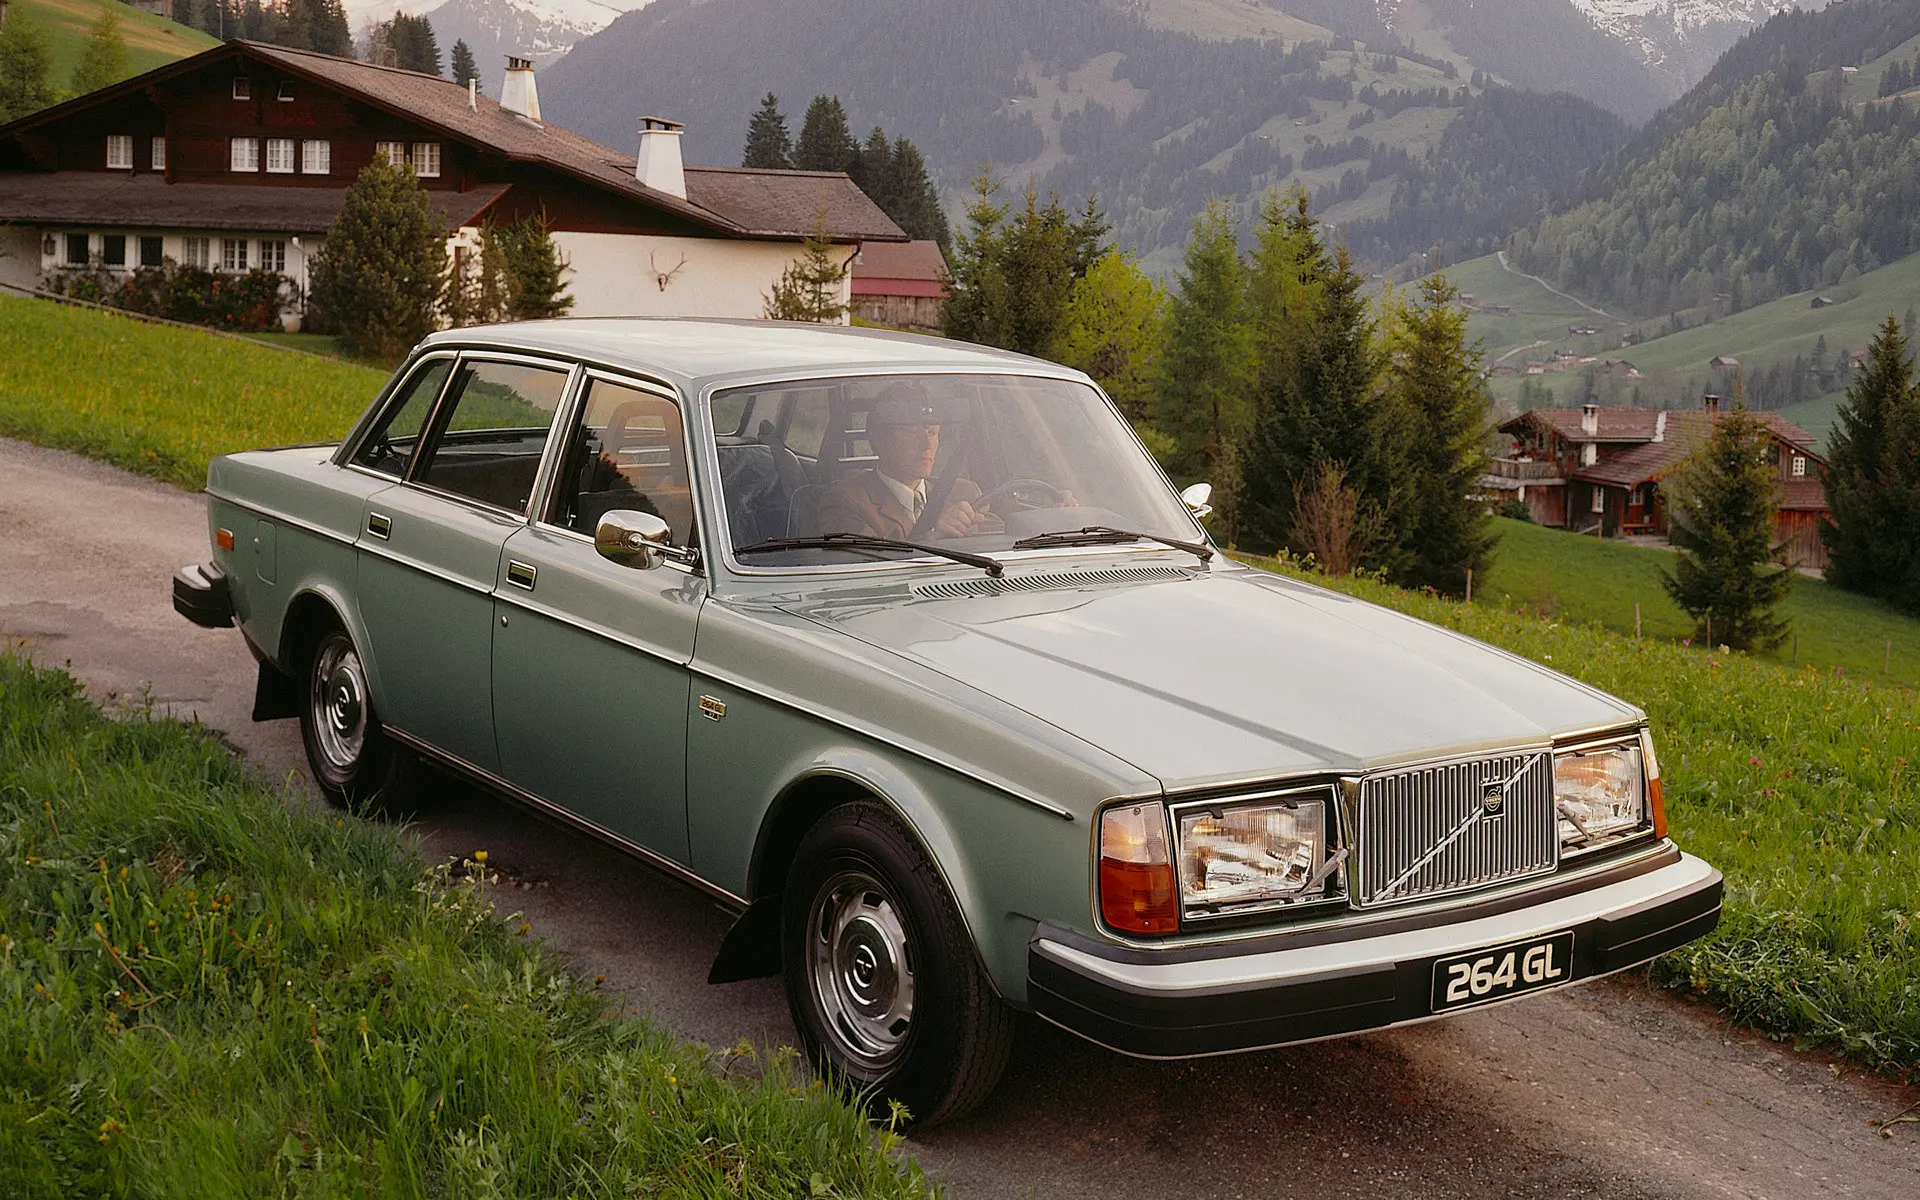 Volvo 264 GL (Ist)